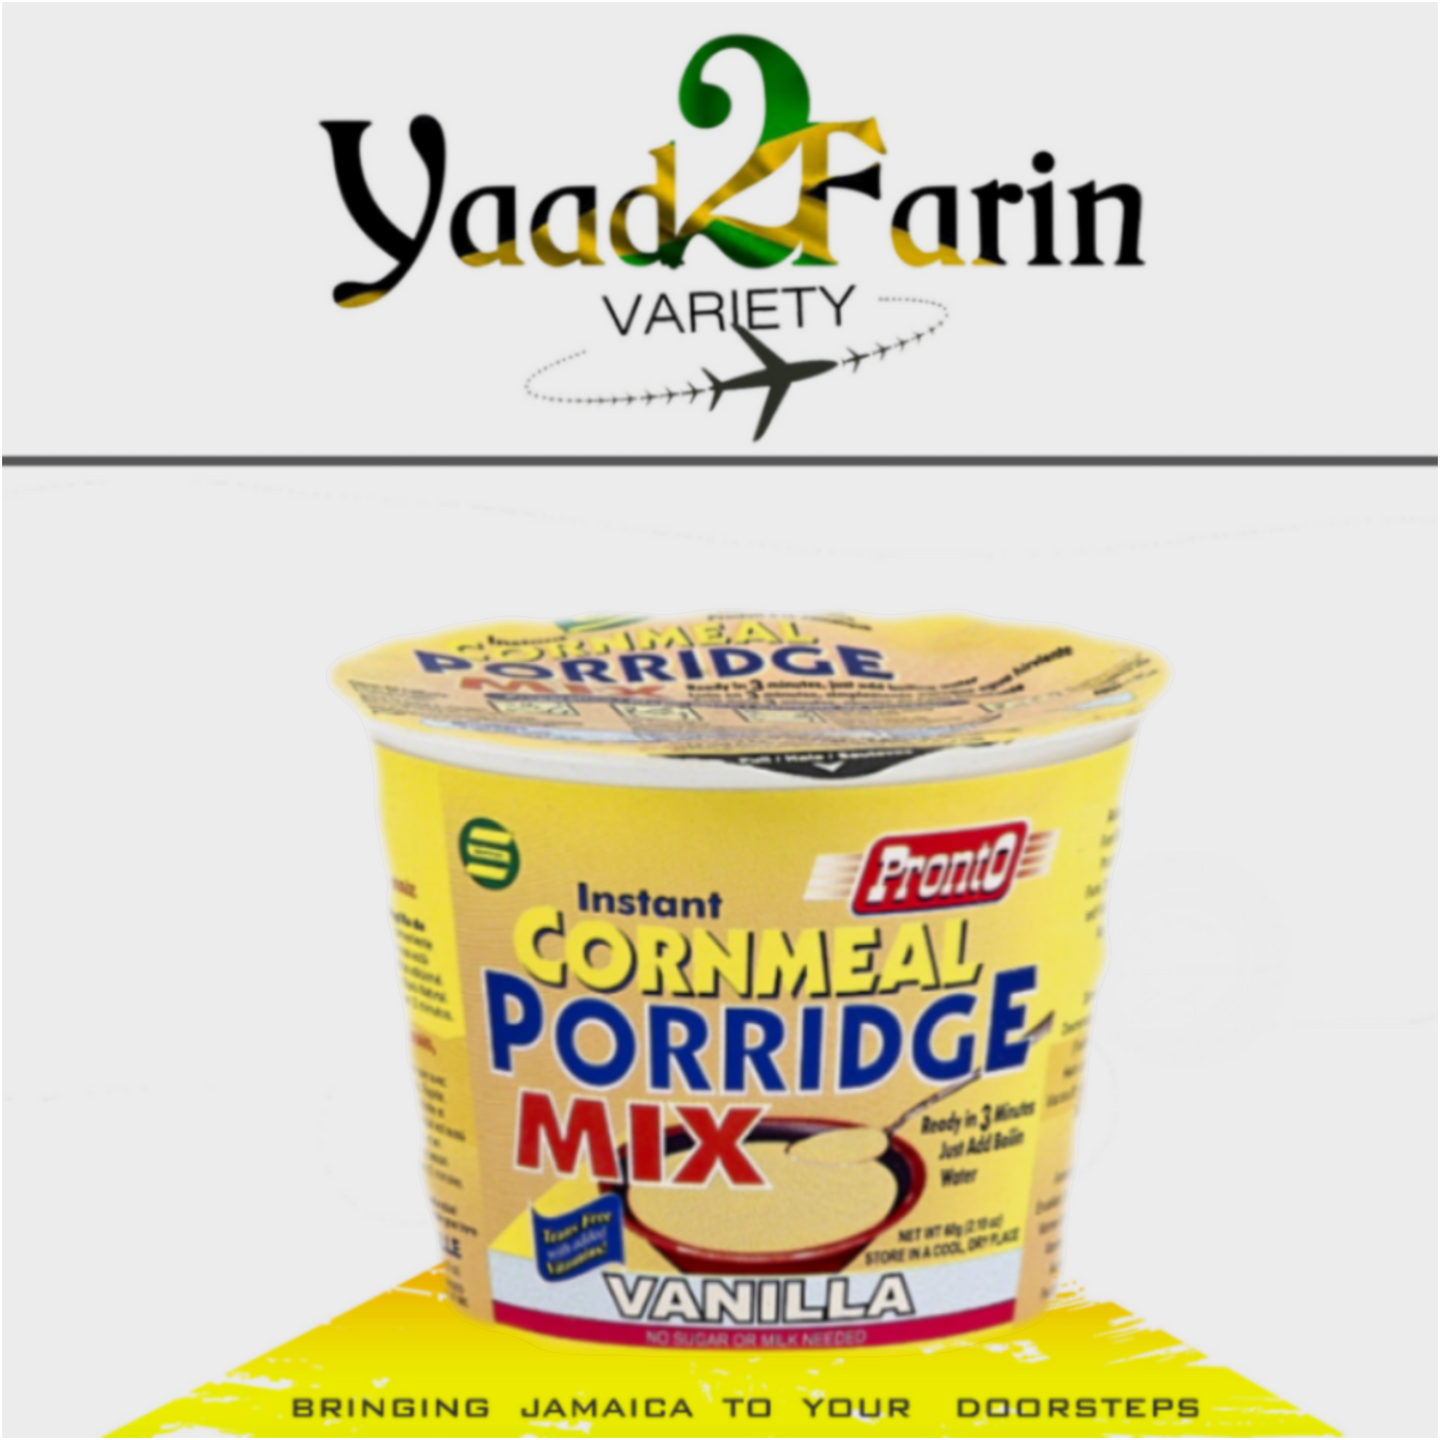 Papas de Carolo (Portuguese cornmeal porridge) 